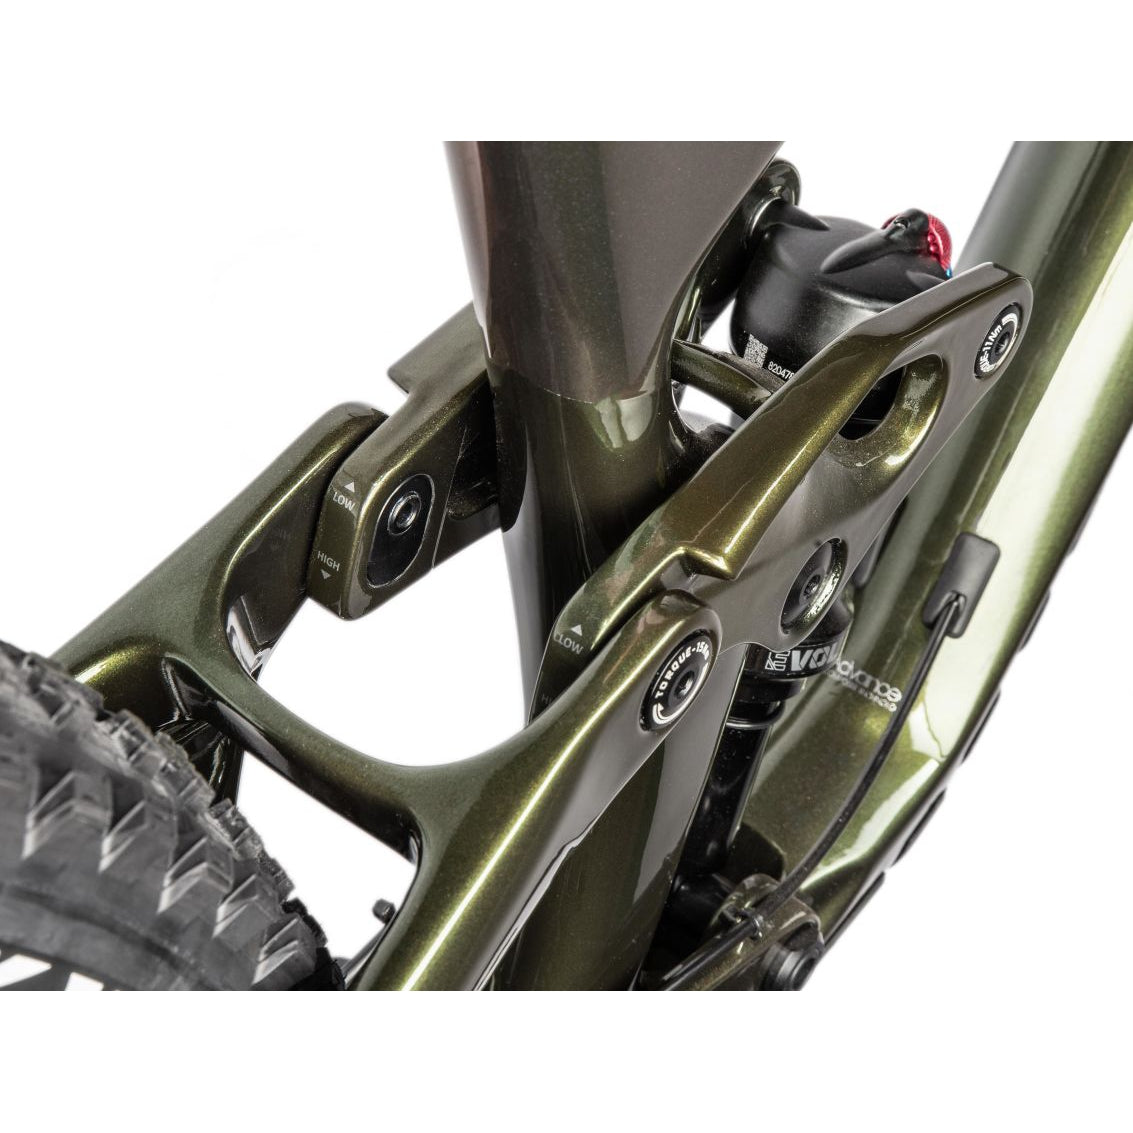 Giant Trance X Advanced Pro 29er 3 Carbon Mountain Bike - Bikes - Bicycle Warehouse